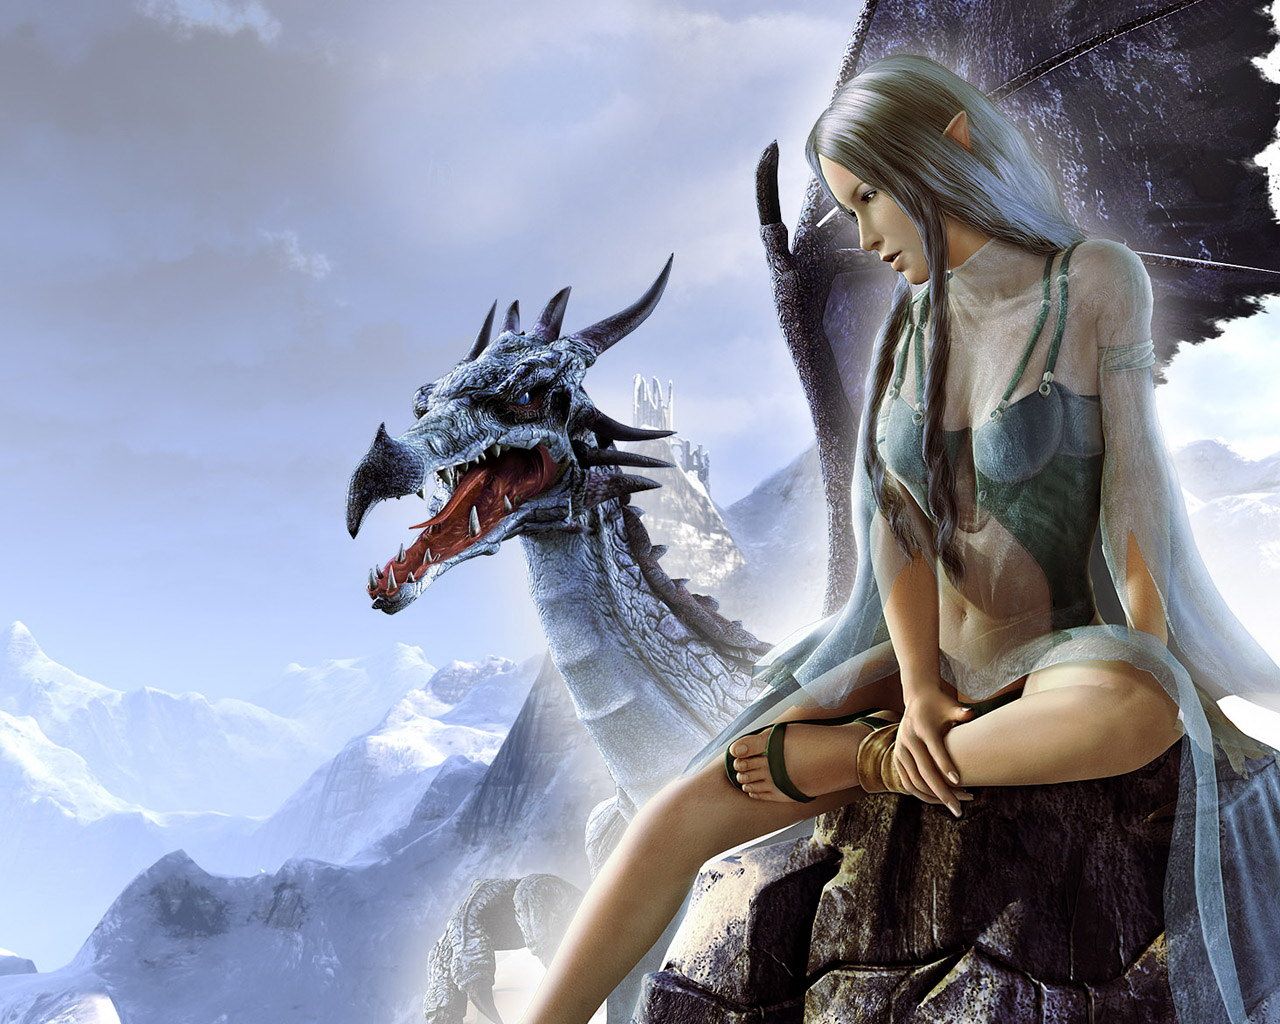 Dalish Elf and Blue Dragon < Fantasy < Gallery < Desktop Wallpaper